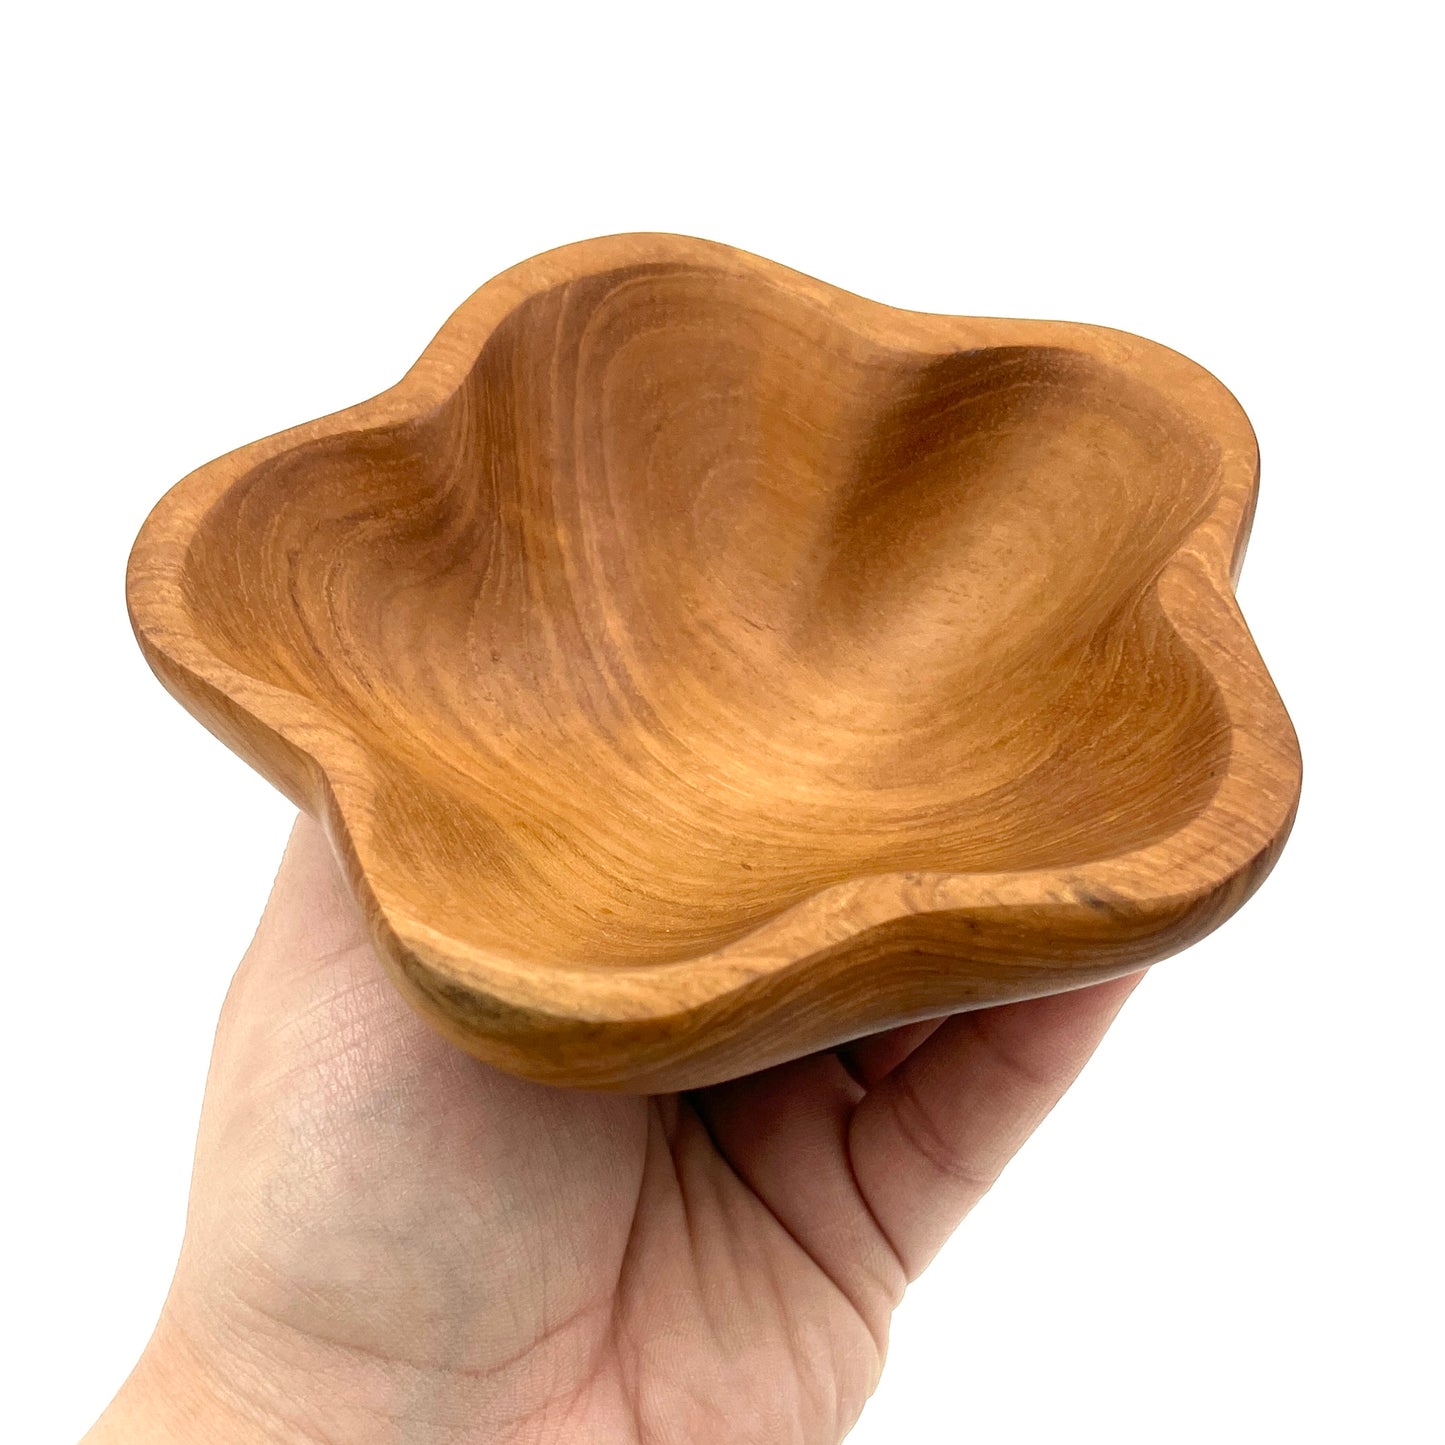 Teak Wood Flower Shaped Bowl